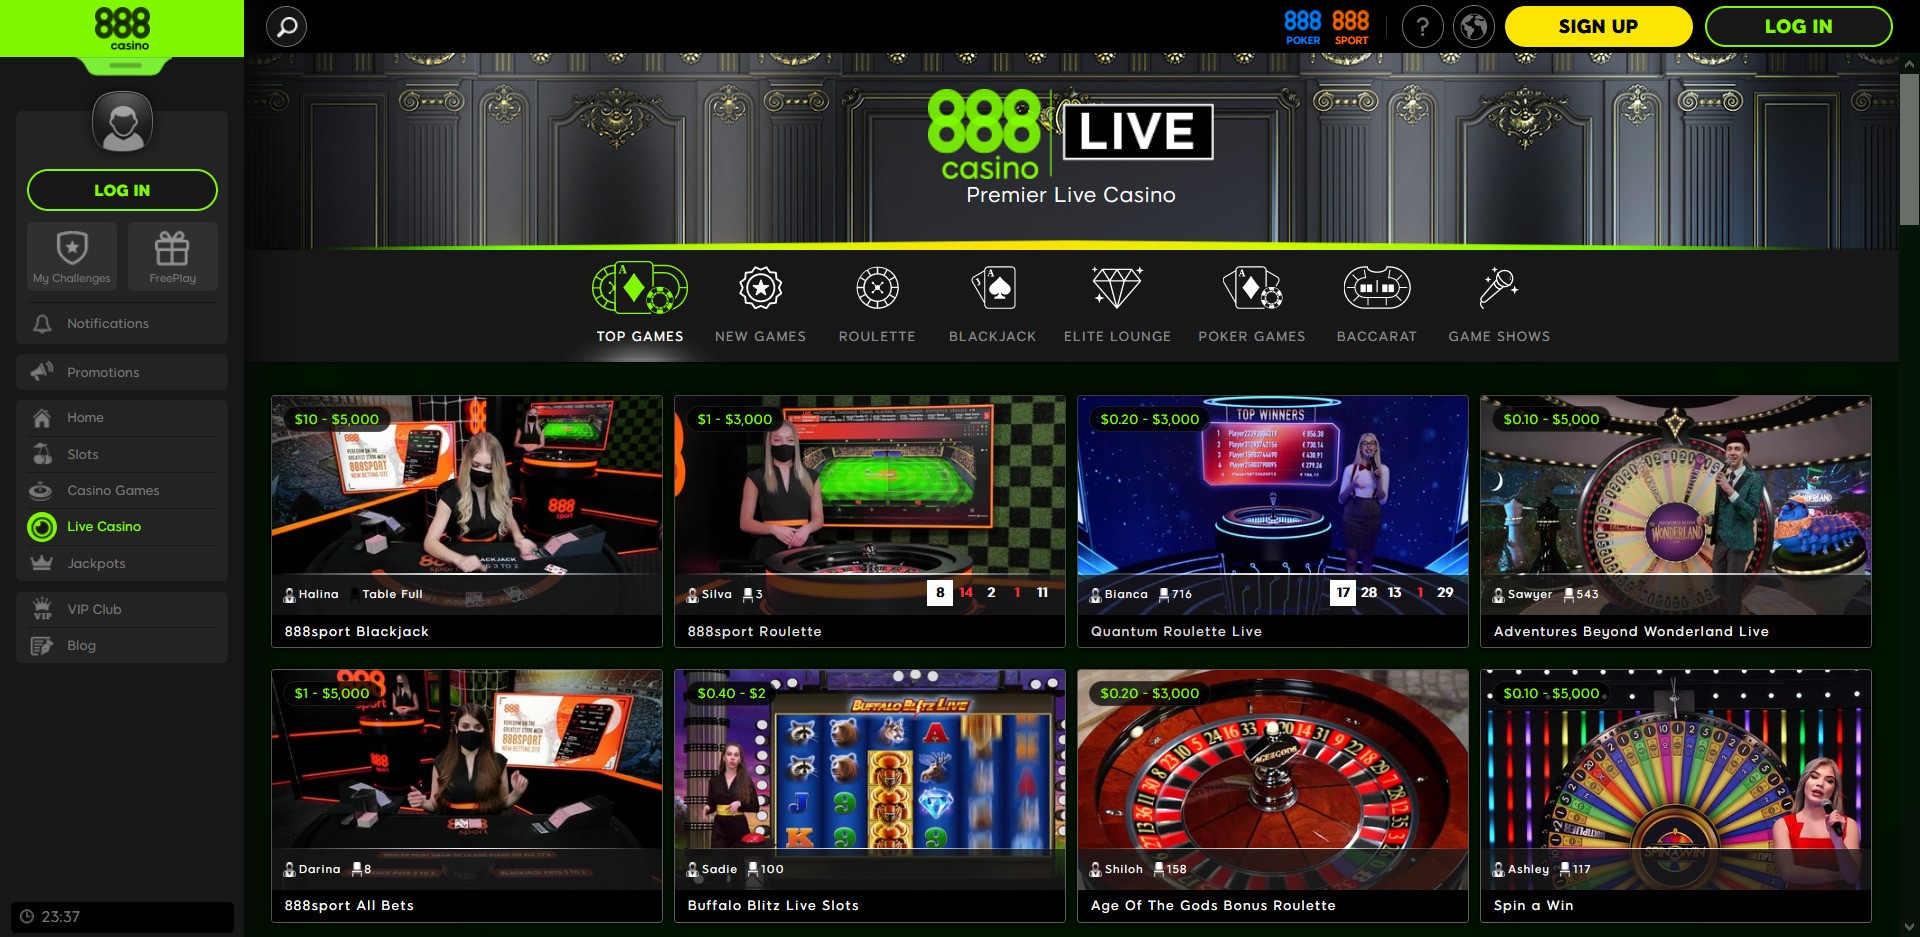 888Casino Live Dealer Games